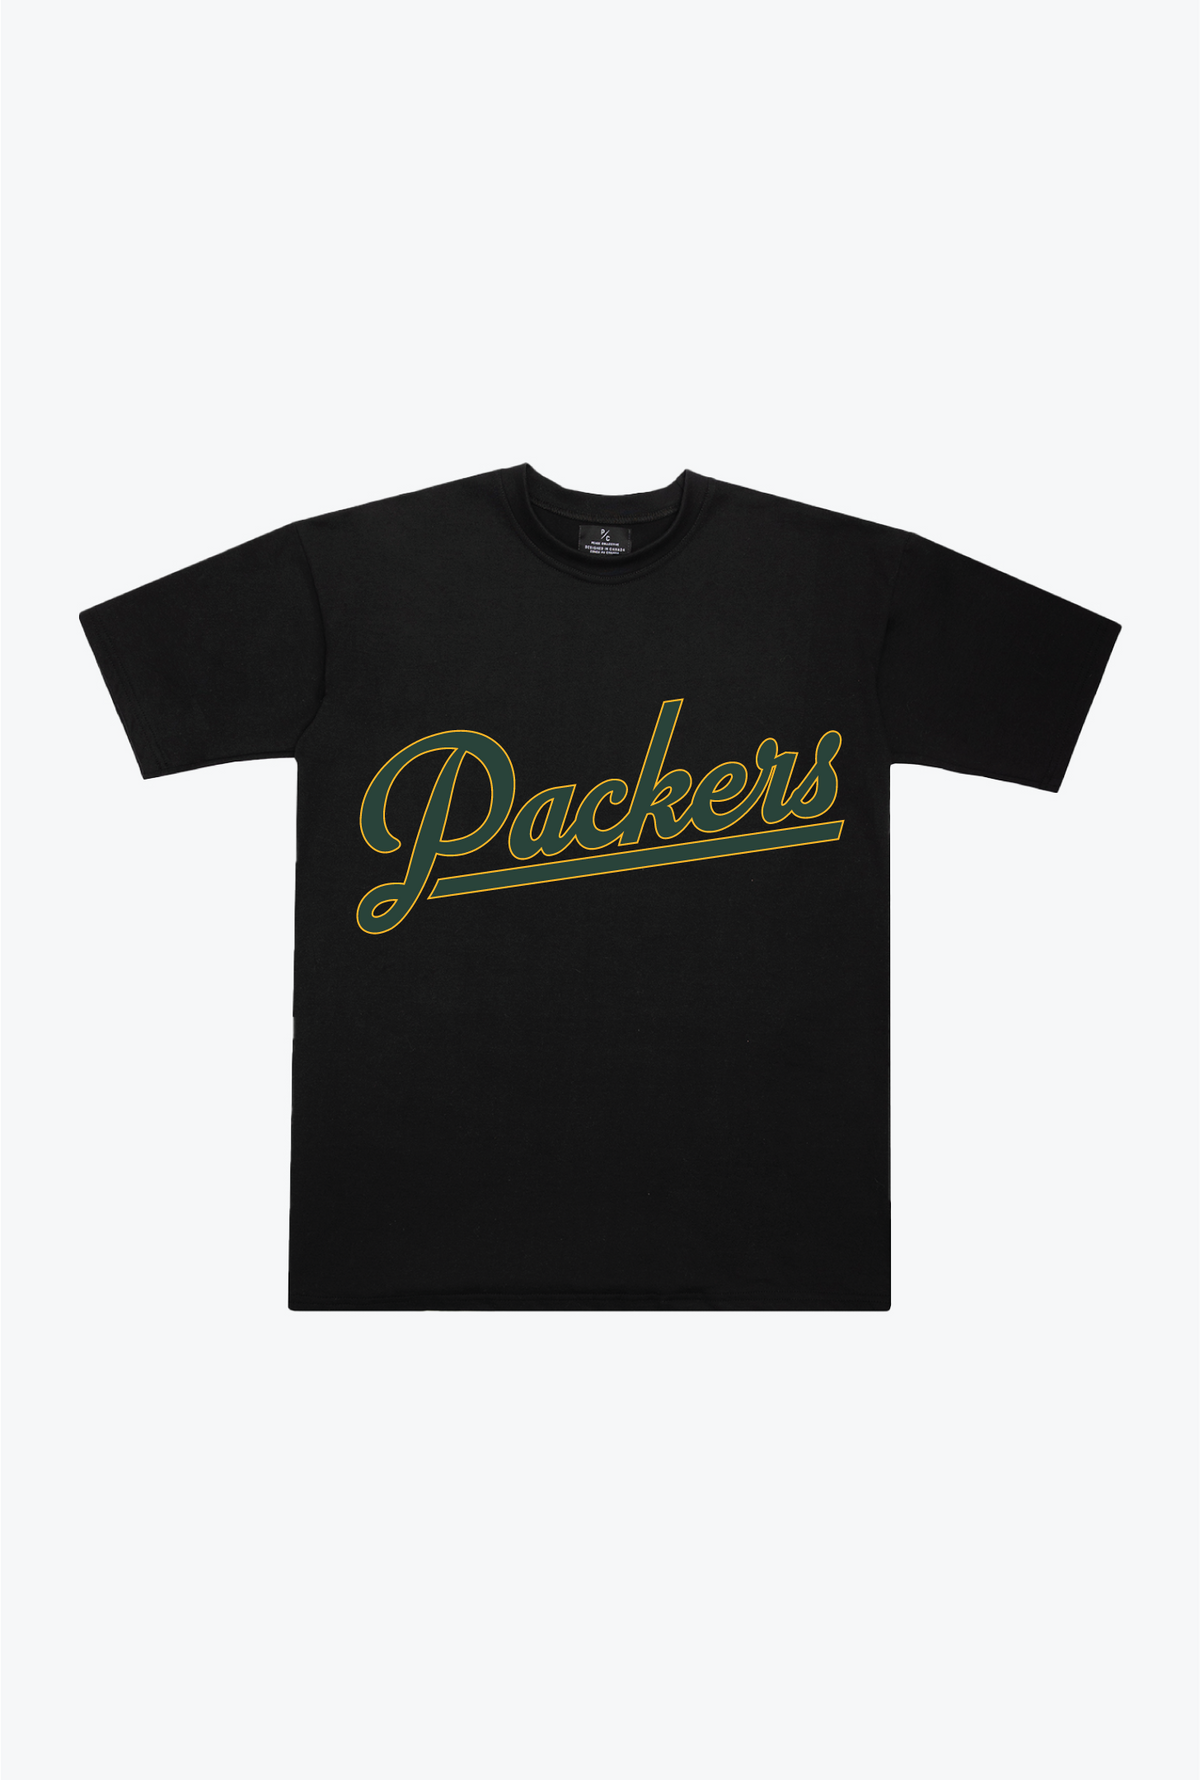 Green Bay Packers Heavyweight T-Shirt - Black